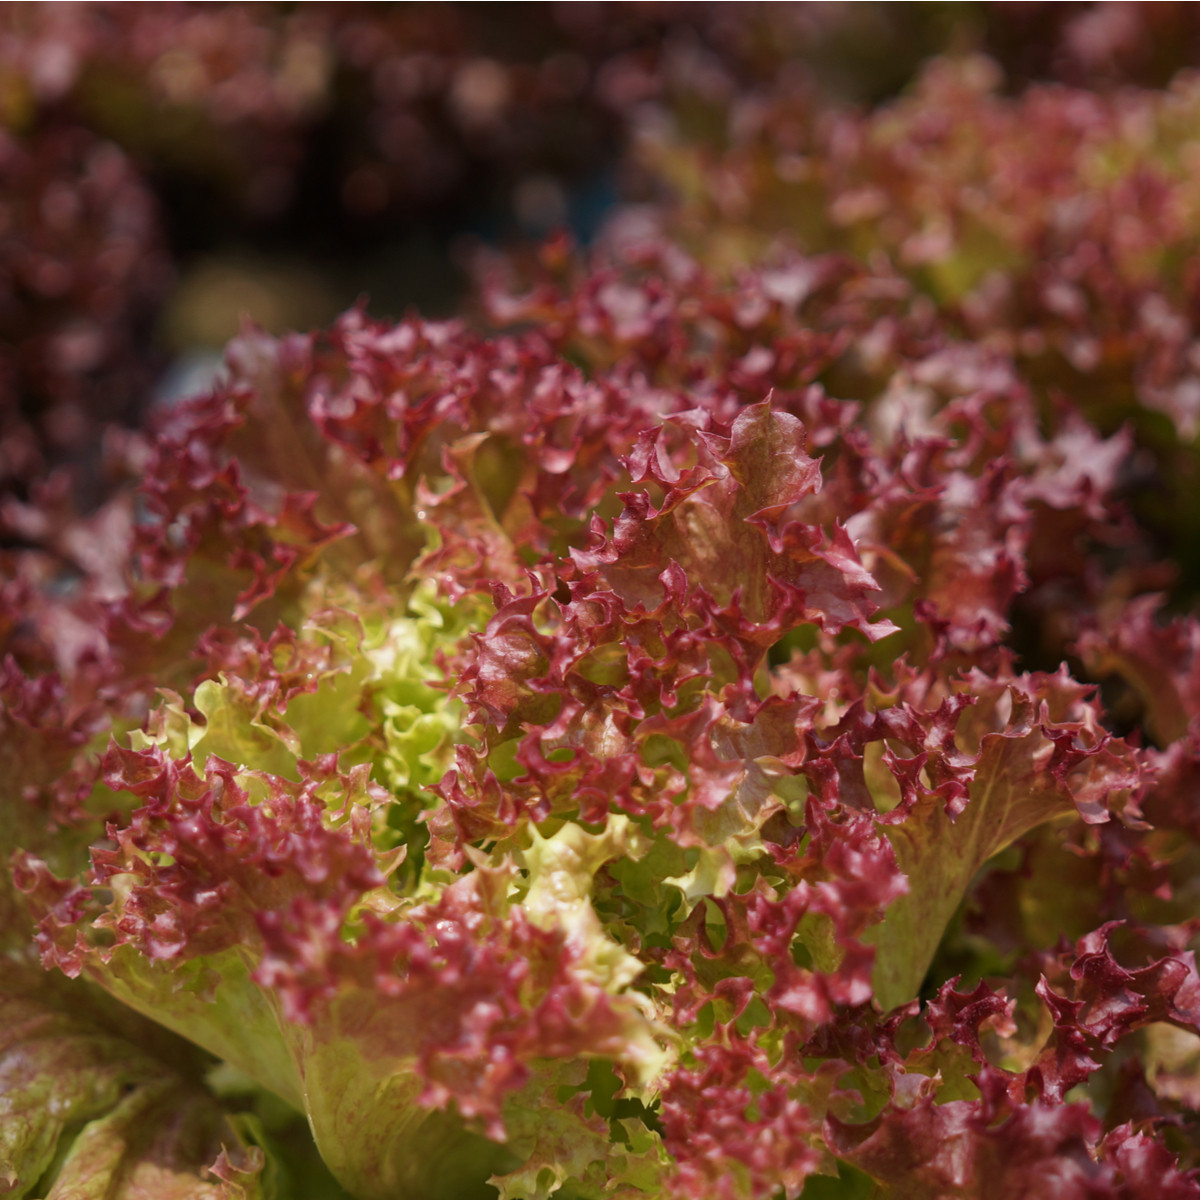 BIO Salát listový kadeřavý Lollo Rossa - Lactuca sativa - bio semena salátu - 0,1 g